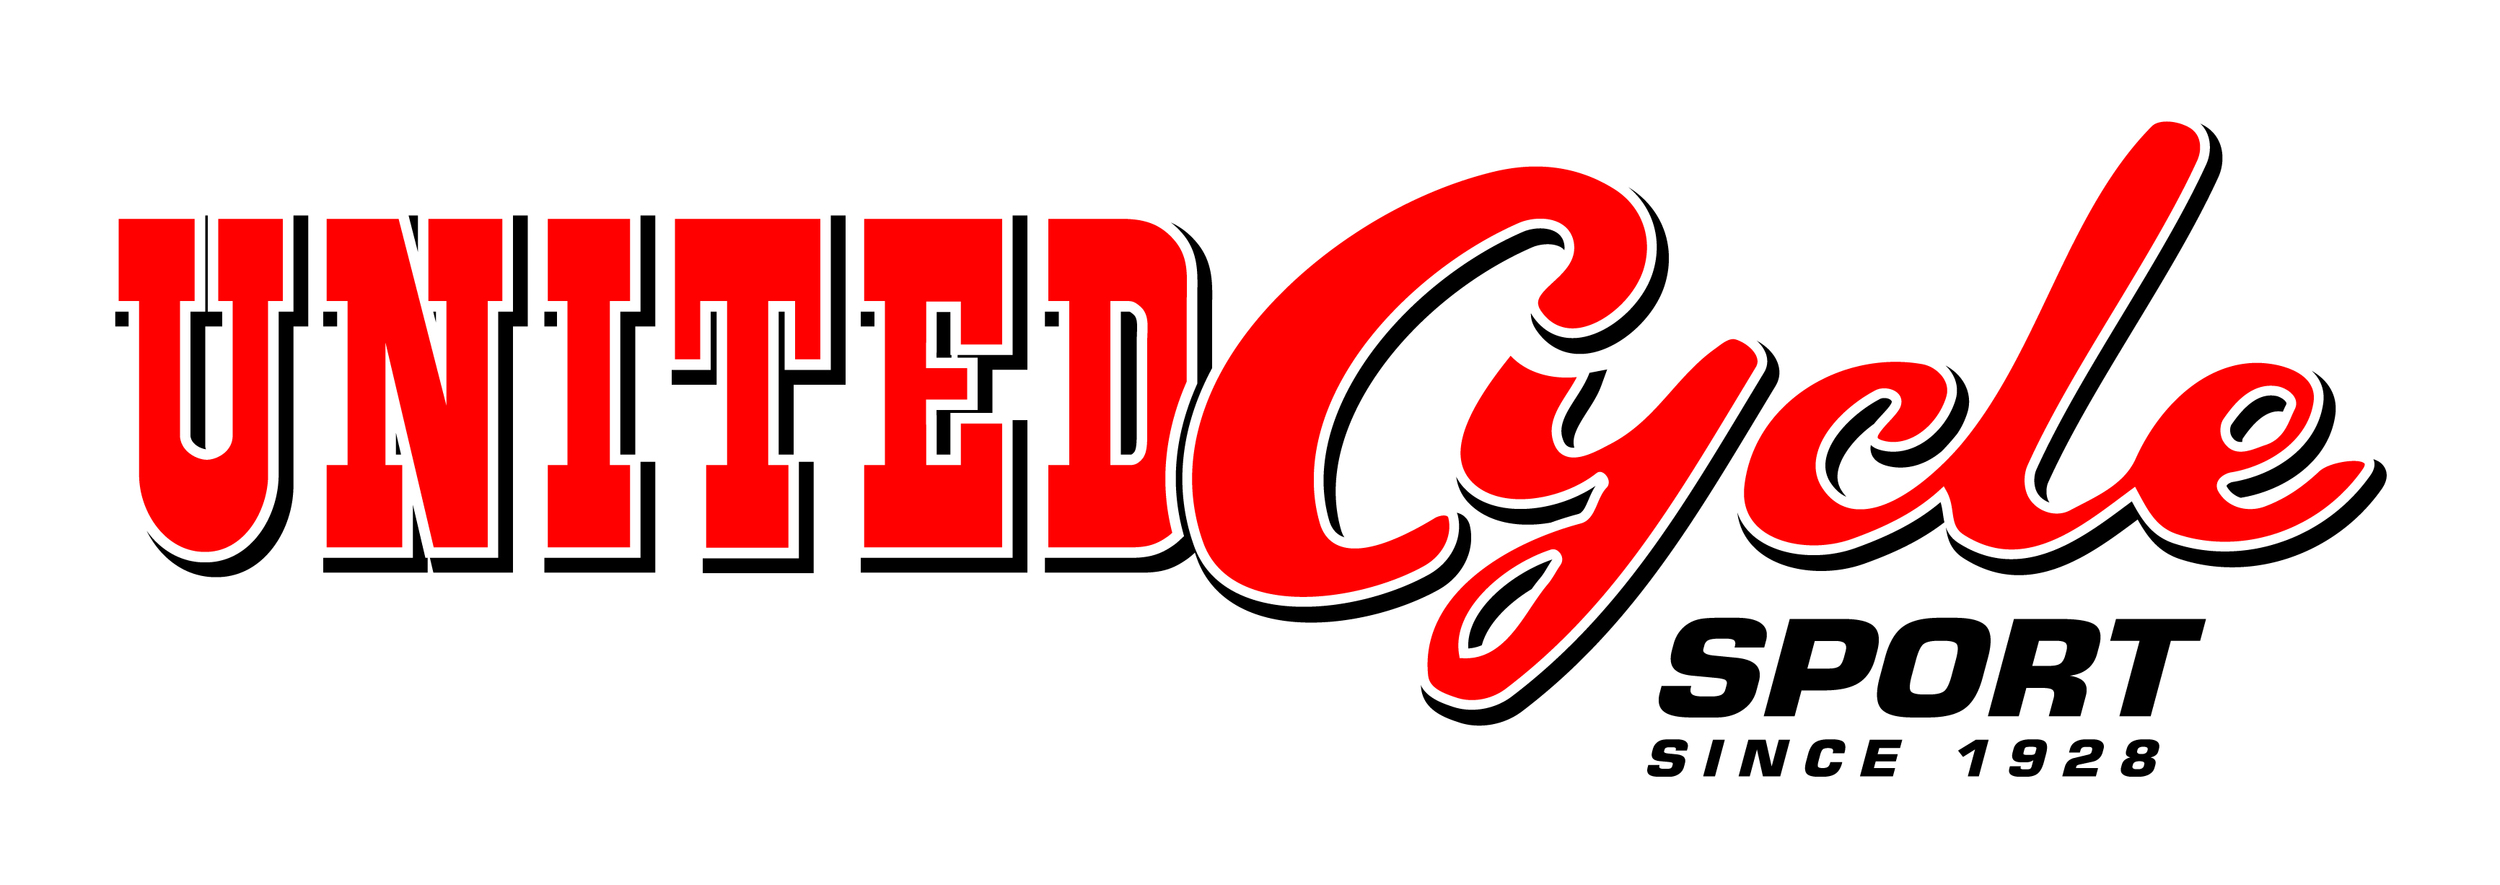 United Cycle Logo.jpg